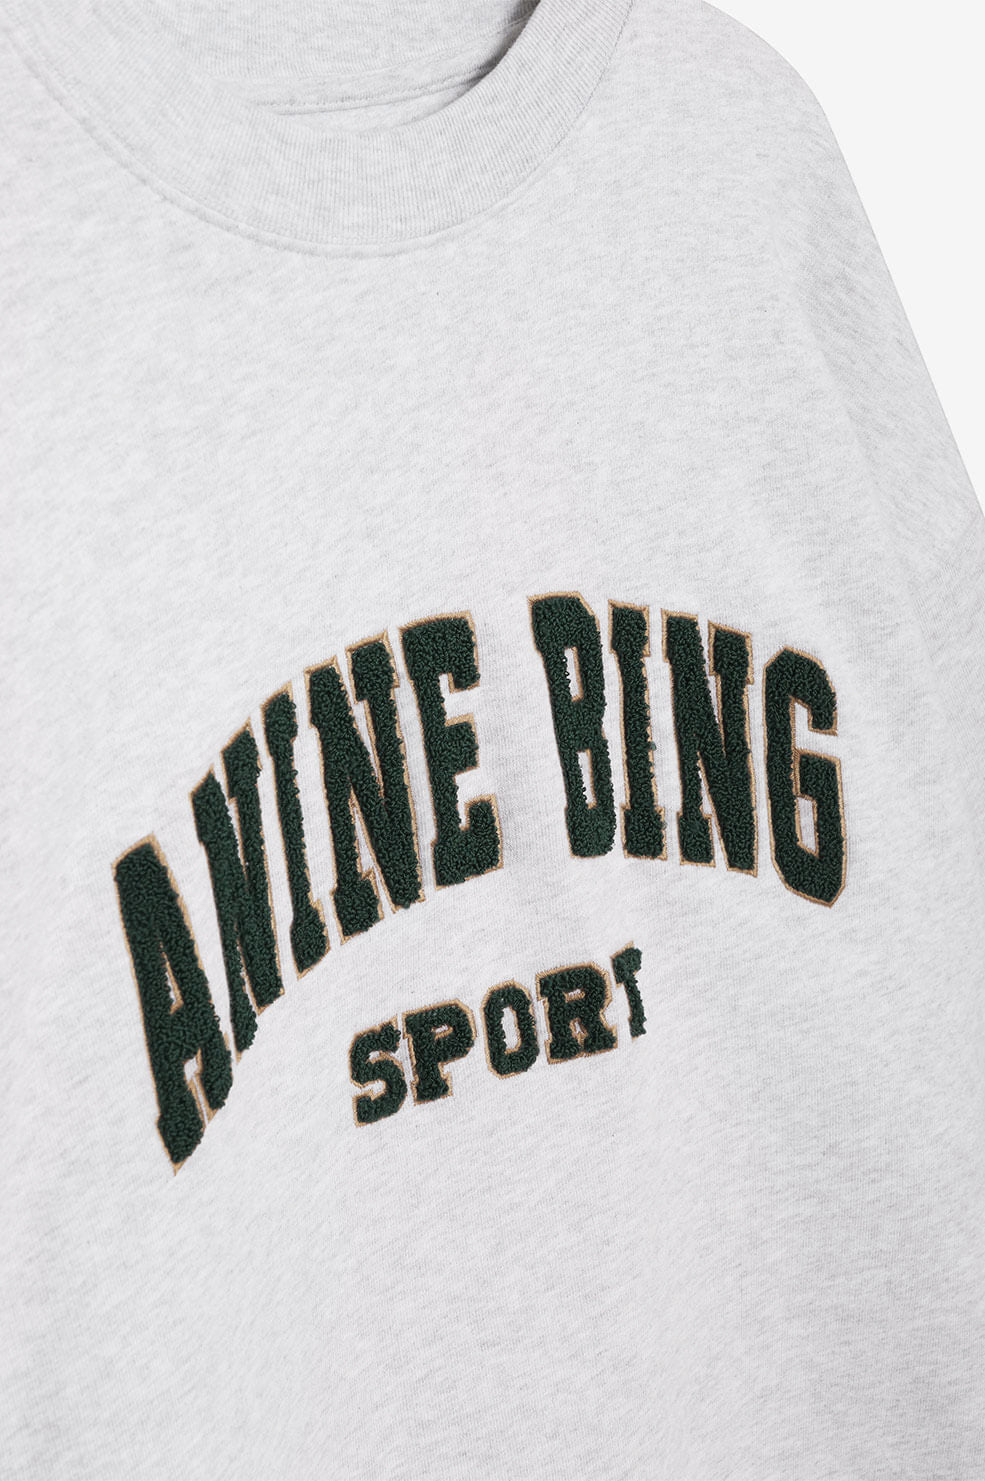 Official Anine Bing Tiger Sweatshirt - Bluecat